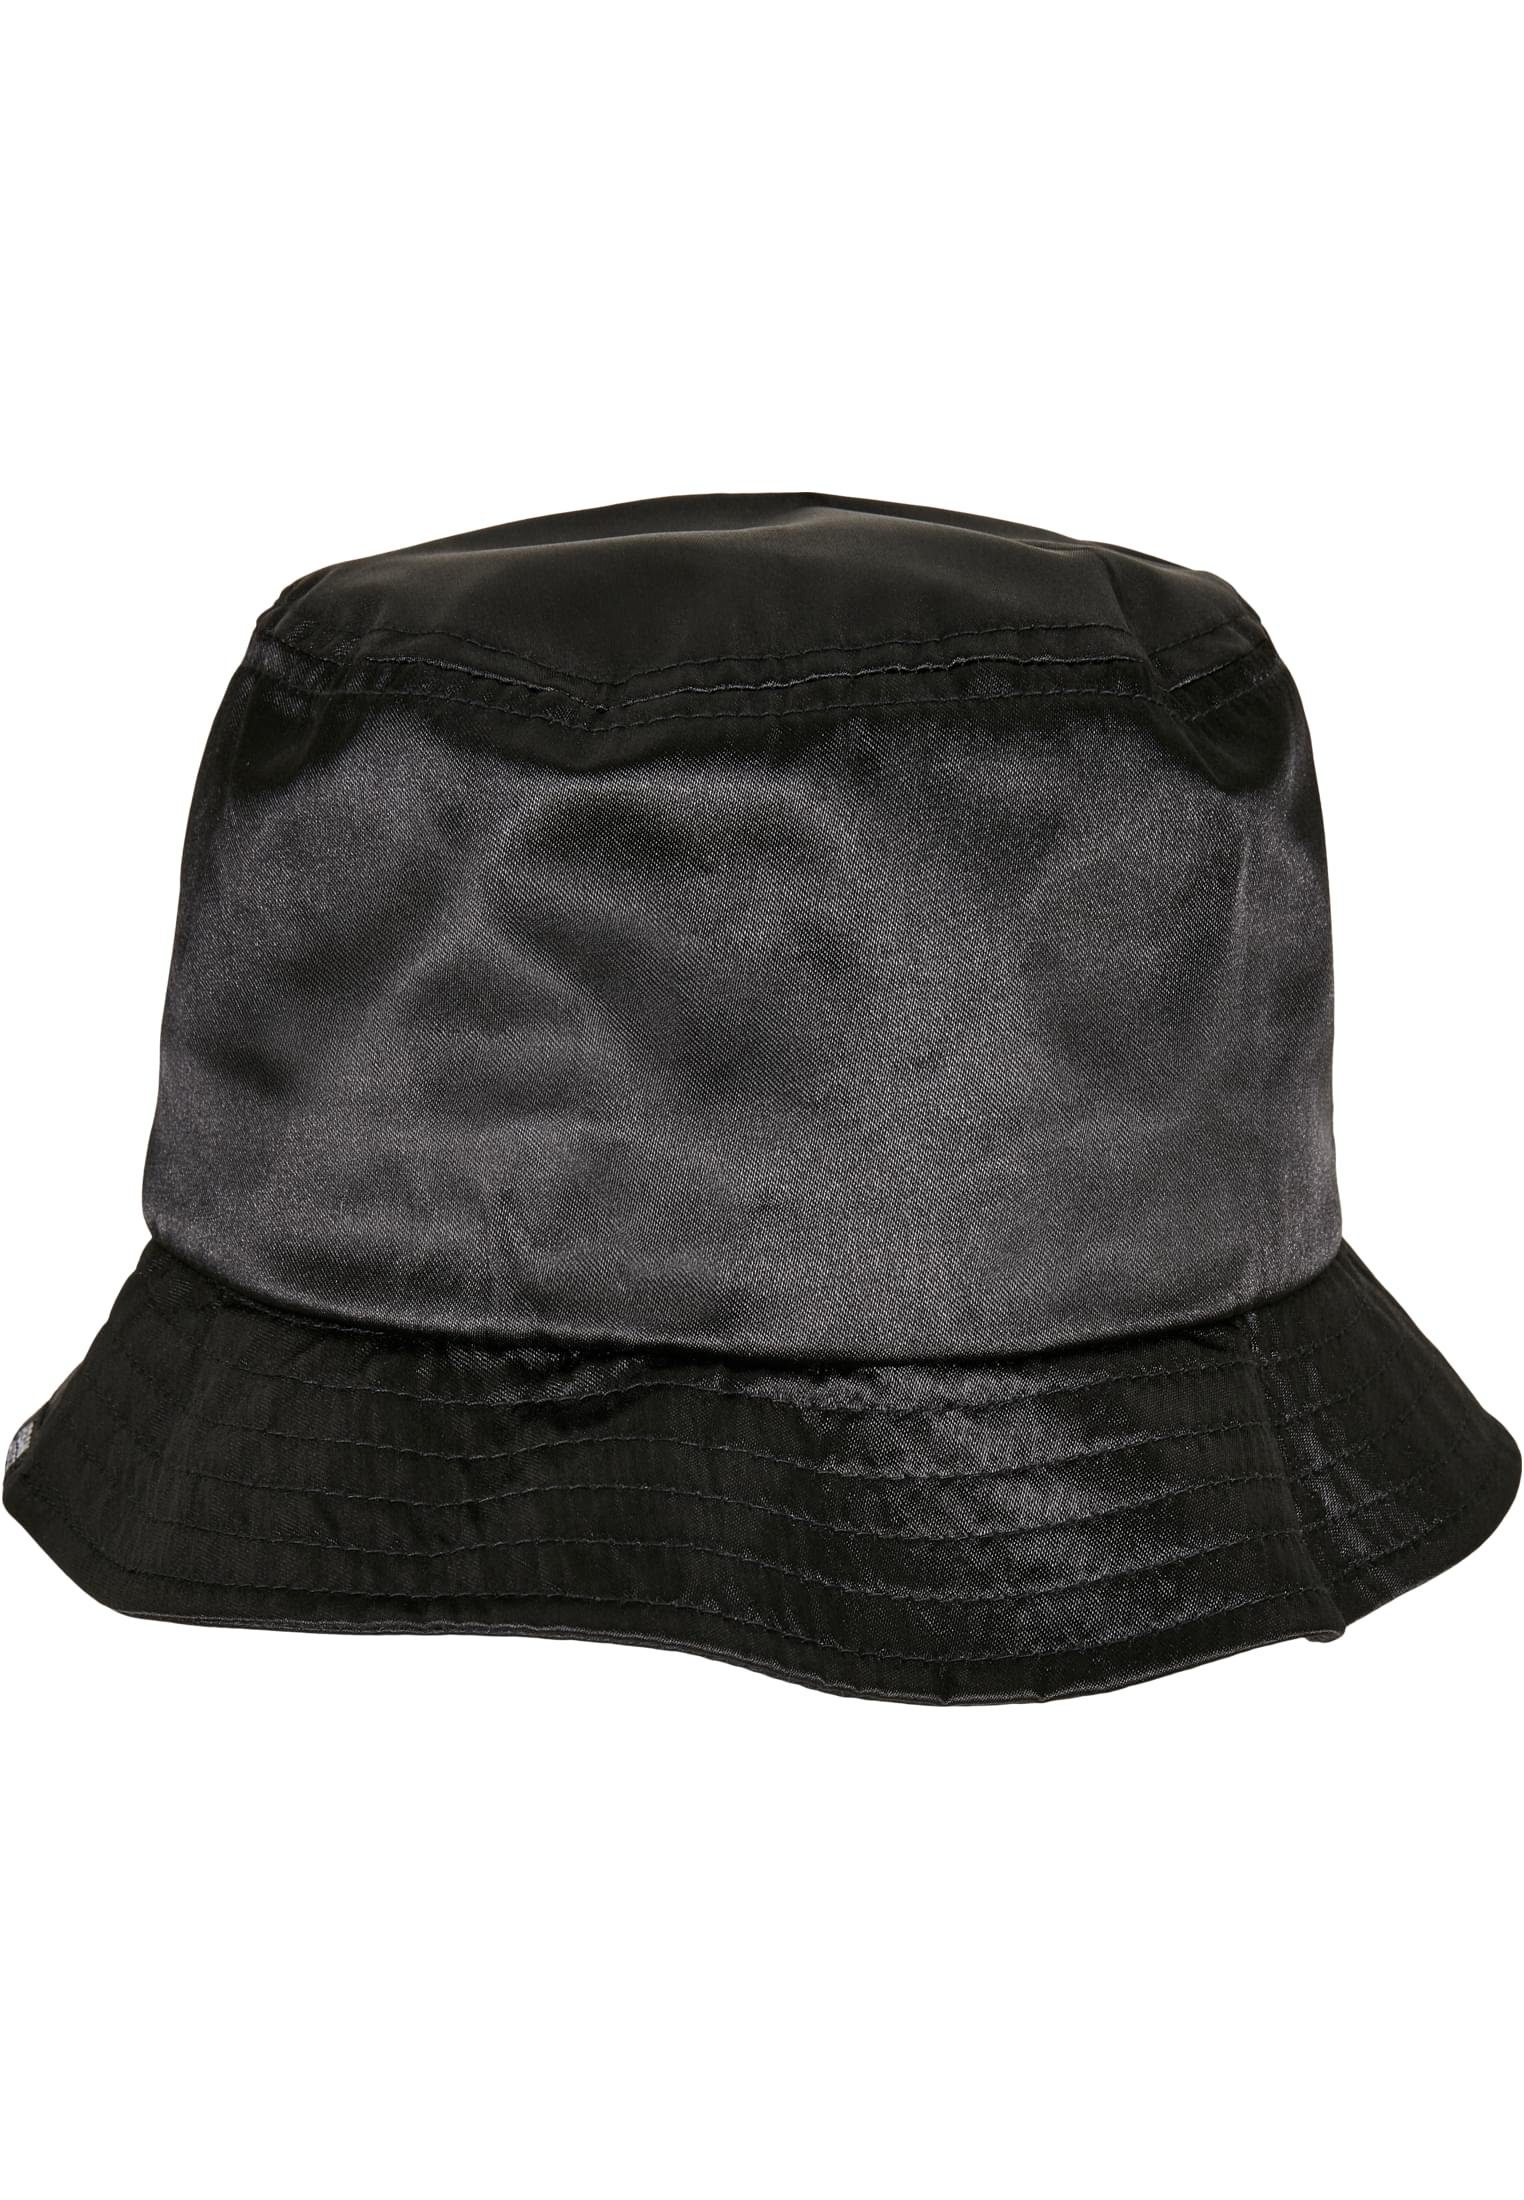 Hat Unisex black URBAN Bucket Cap CLASSICS Satin Trucker